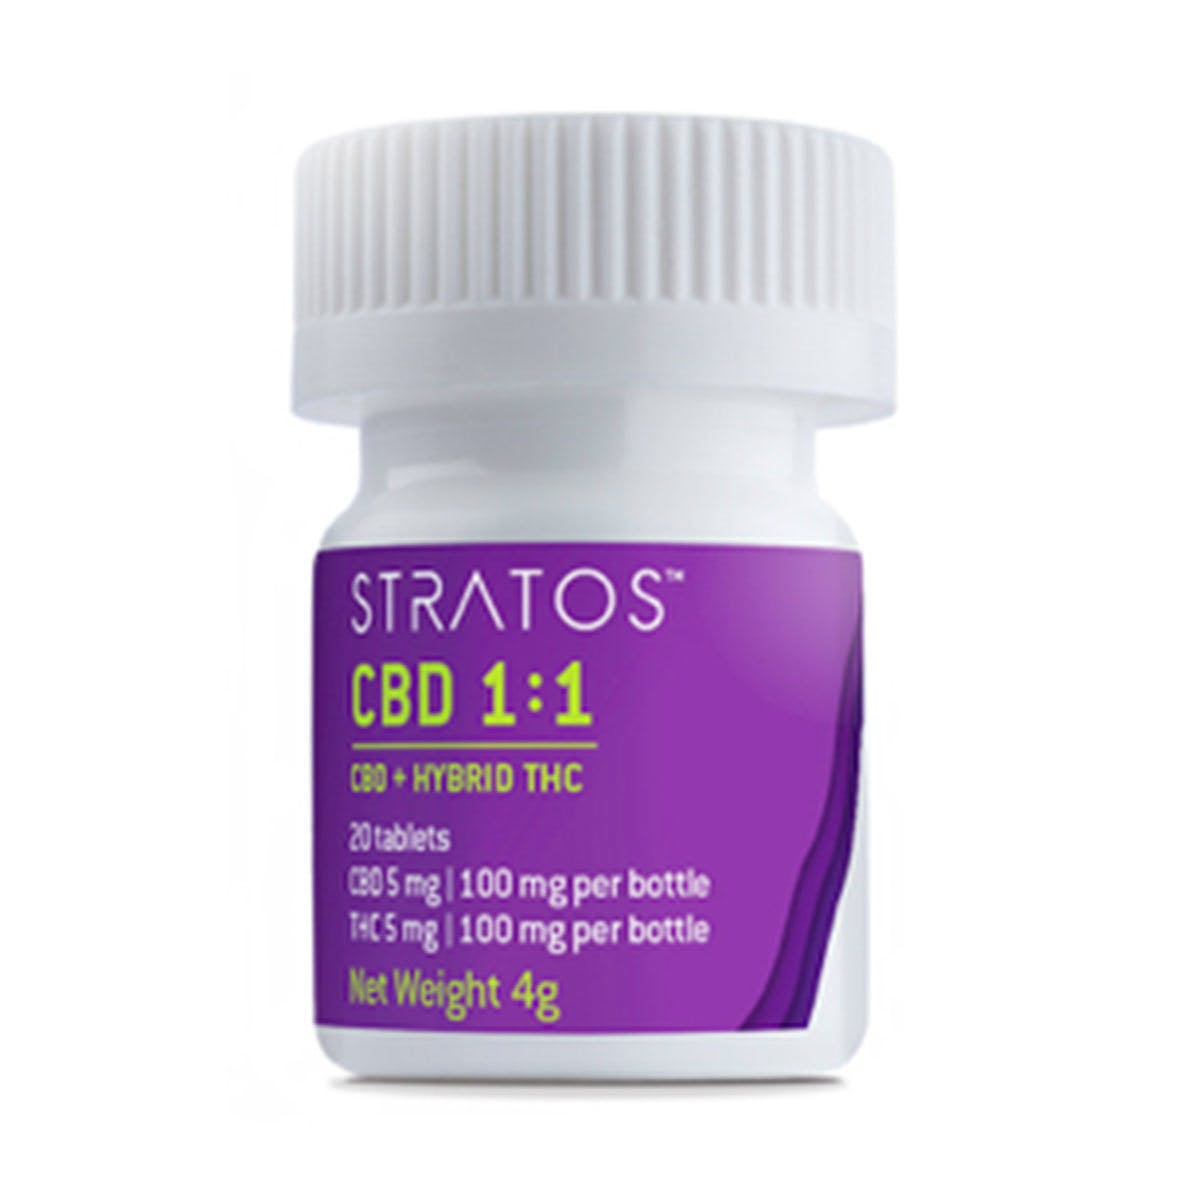 marijuana-dispensaries-trinidad-harvesting-company-in-trinidad-cbd-11-cbd-2b-hybrid-thc-capsules